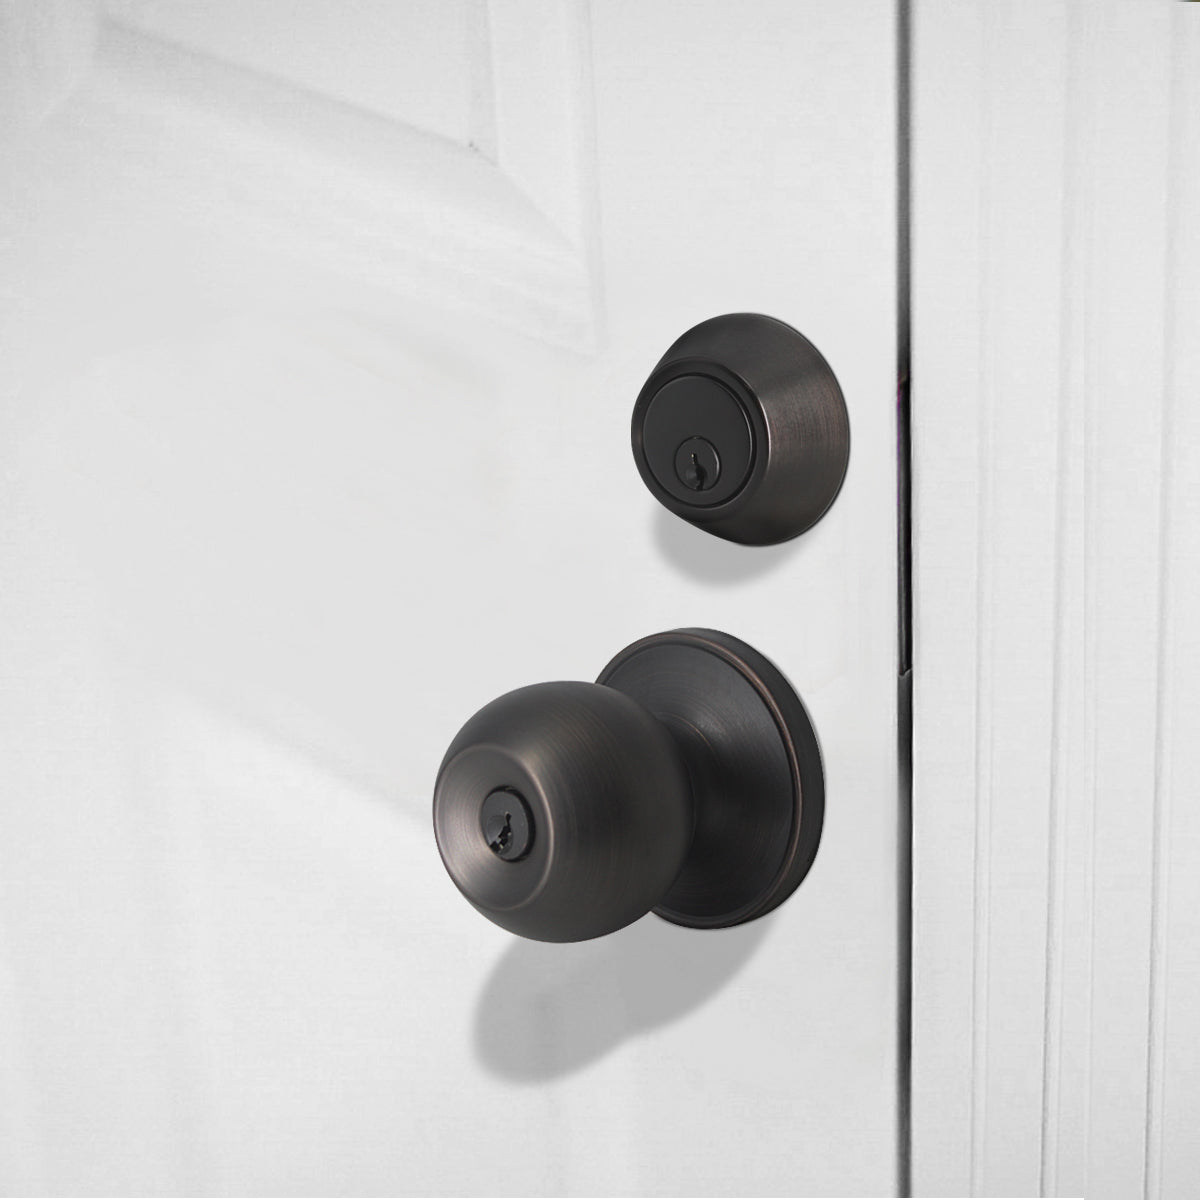 Keyed Alike Entry Door Lock Knob with Single Cylinder Deadbolt, Polish -  Probrico